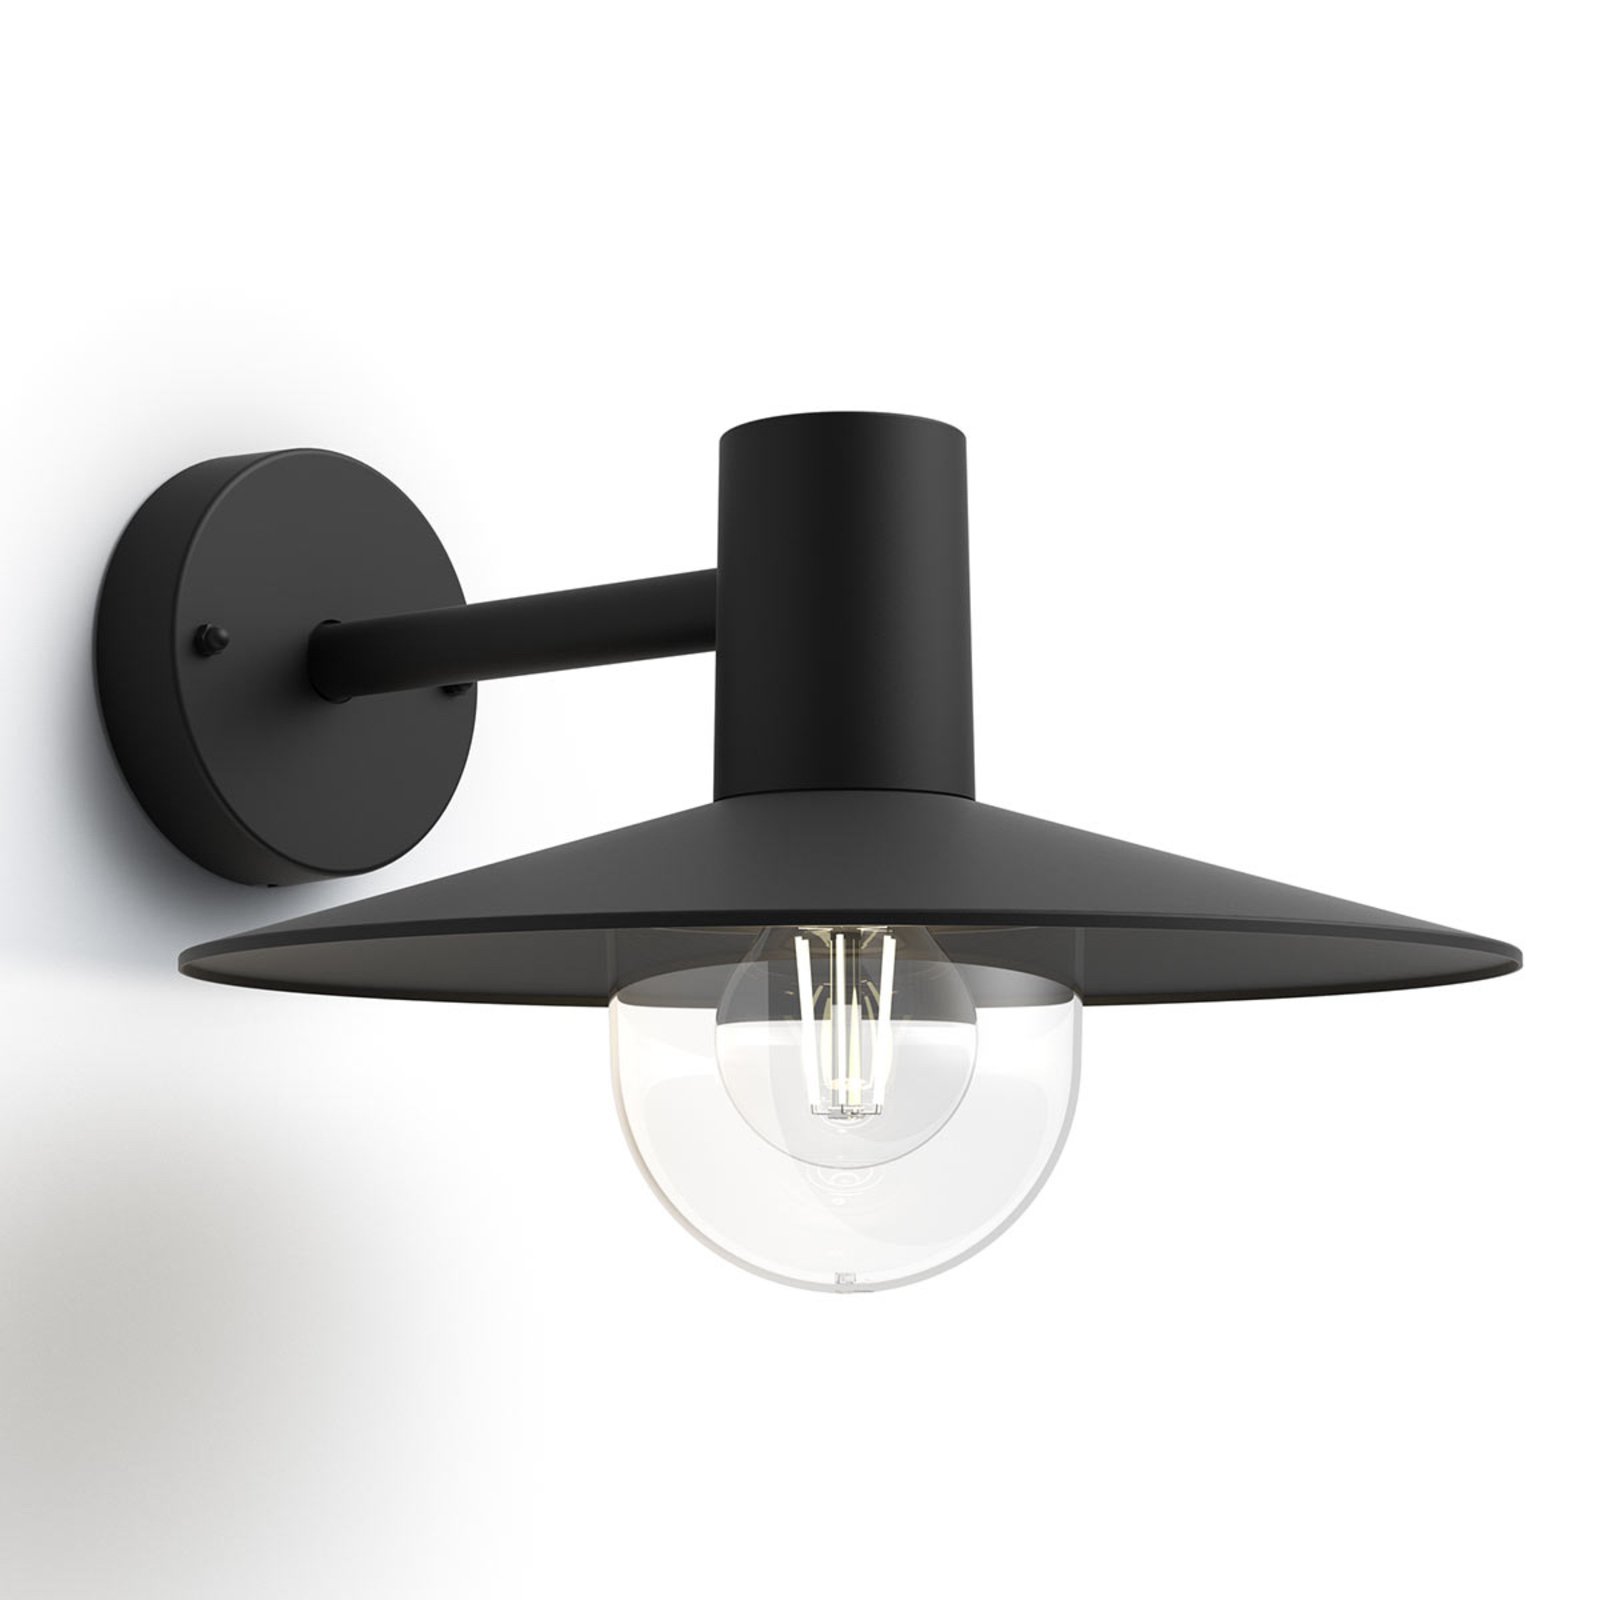 Skua myGarden - nowoczesna lampa zewnętrzna